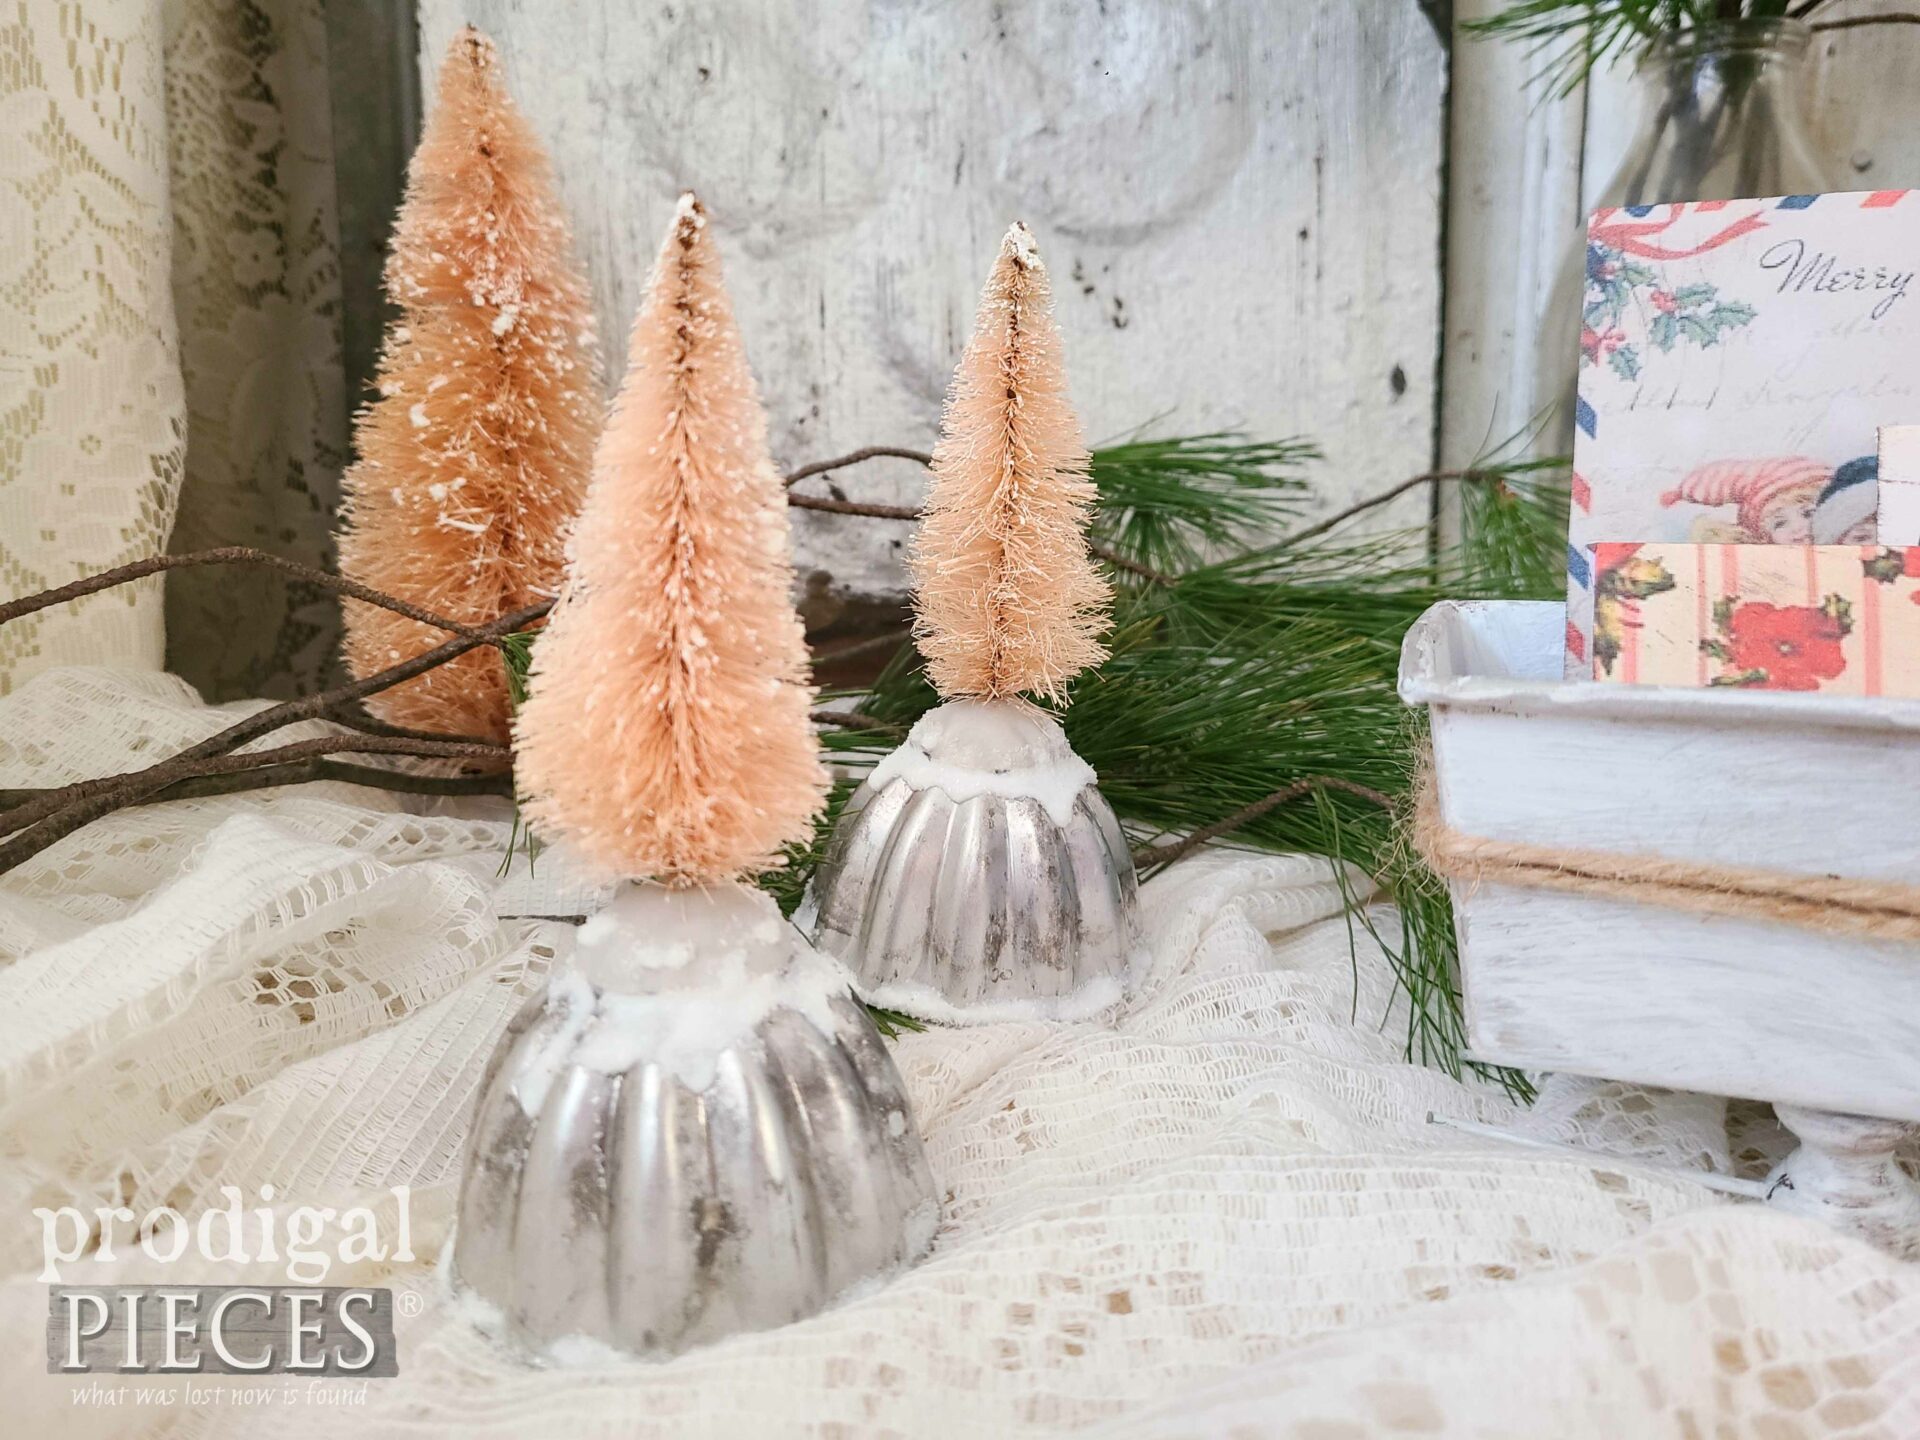 DIY Jello Mold Repurposed Christmas Ornaments by Larissa of Prodigal Pieces | prodigalpieces.com #prodigalpieces #repurposed #diy #farmhouse #Christmas